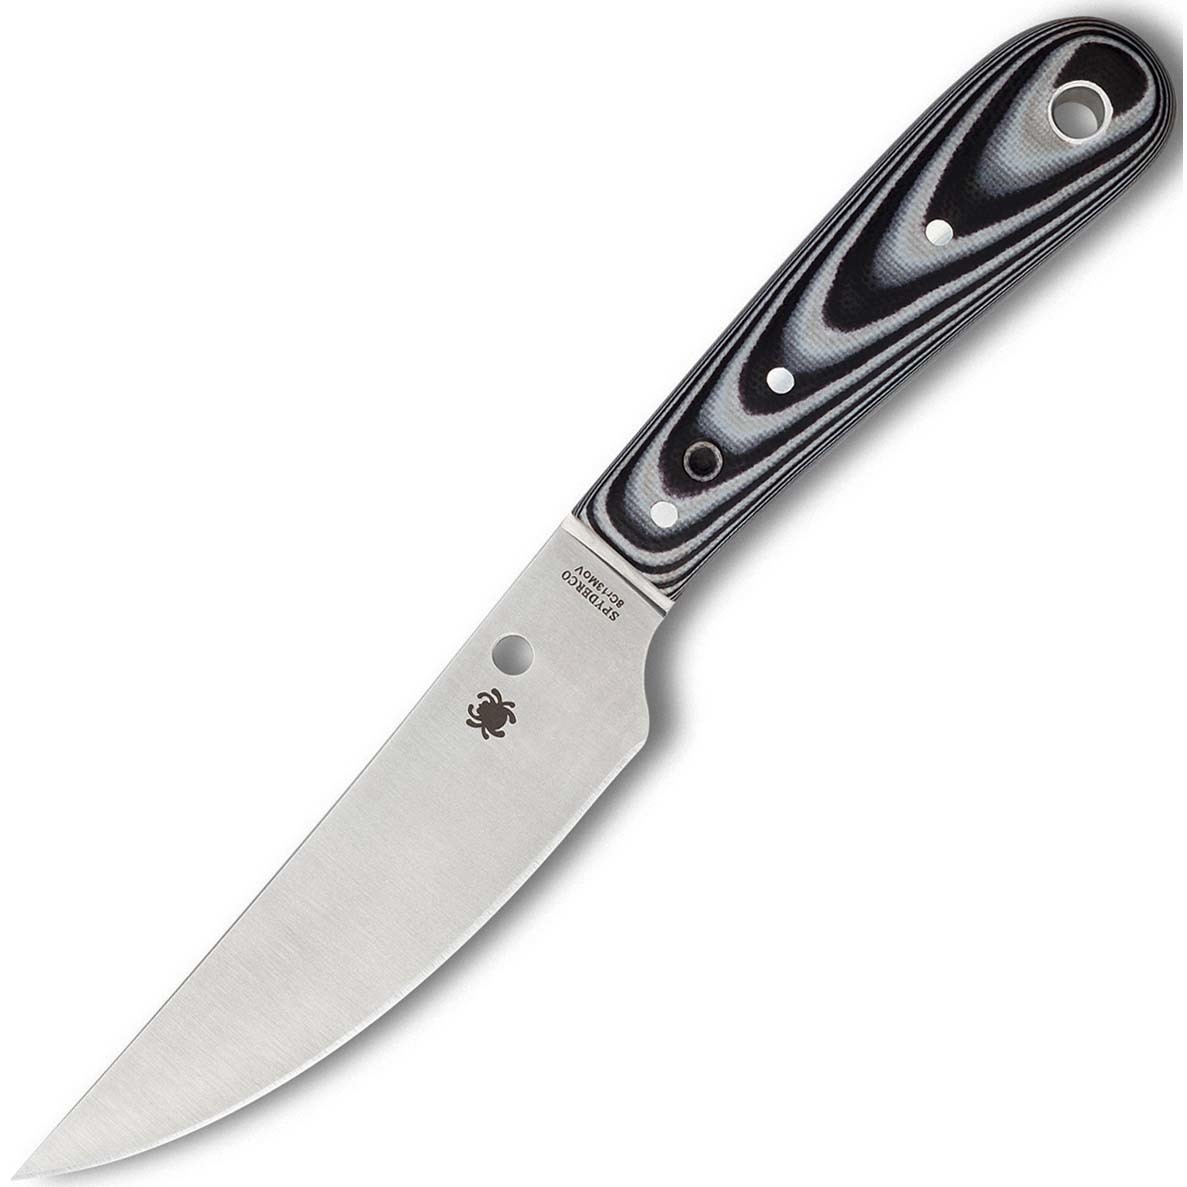 Нож с фиксированным клинком Bow River Designed by Phil Wilson, сталь 8Cr13MoV, рукоять G-10